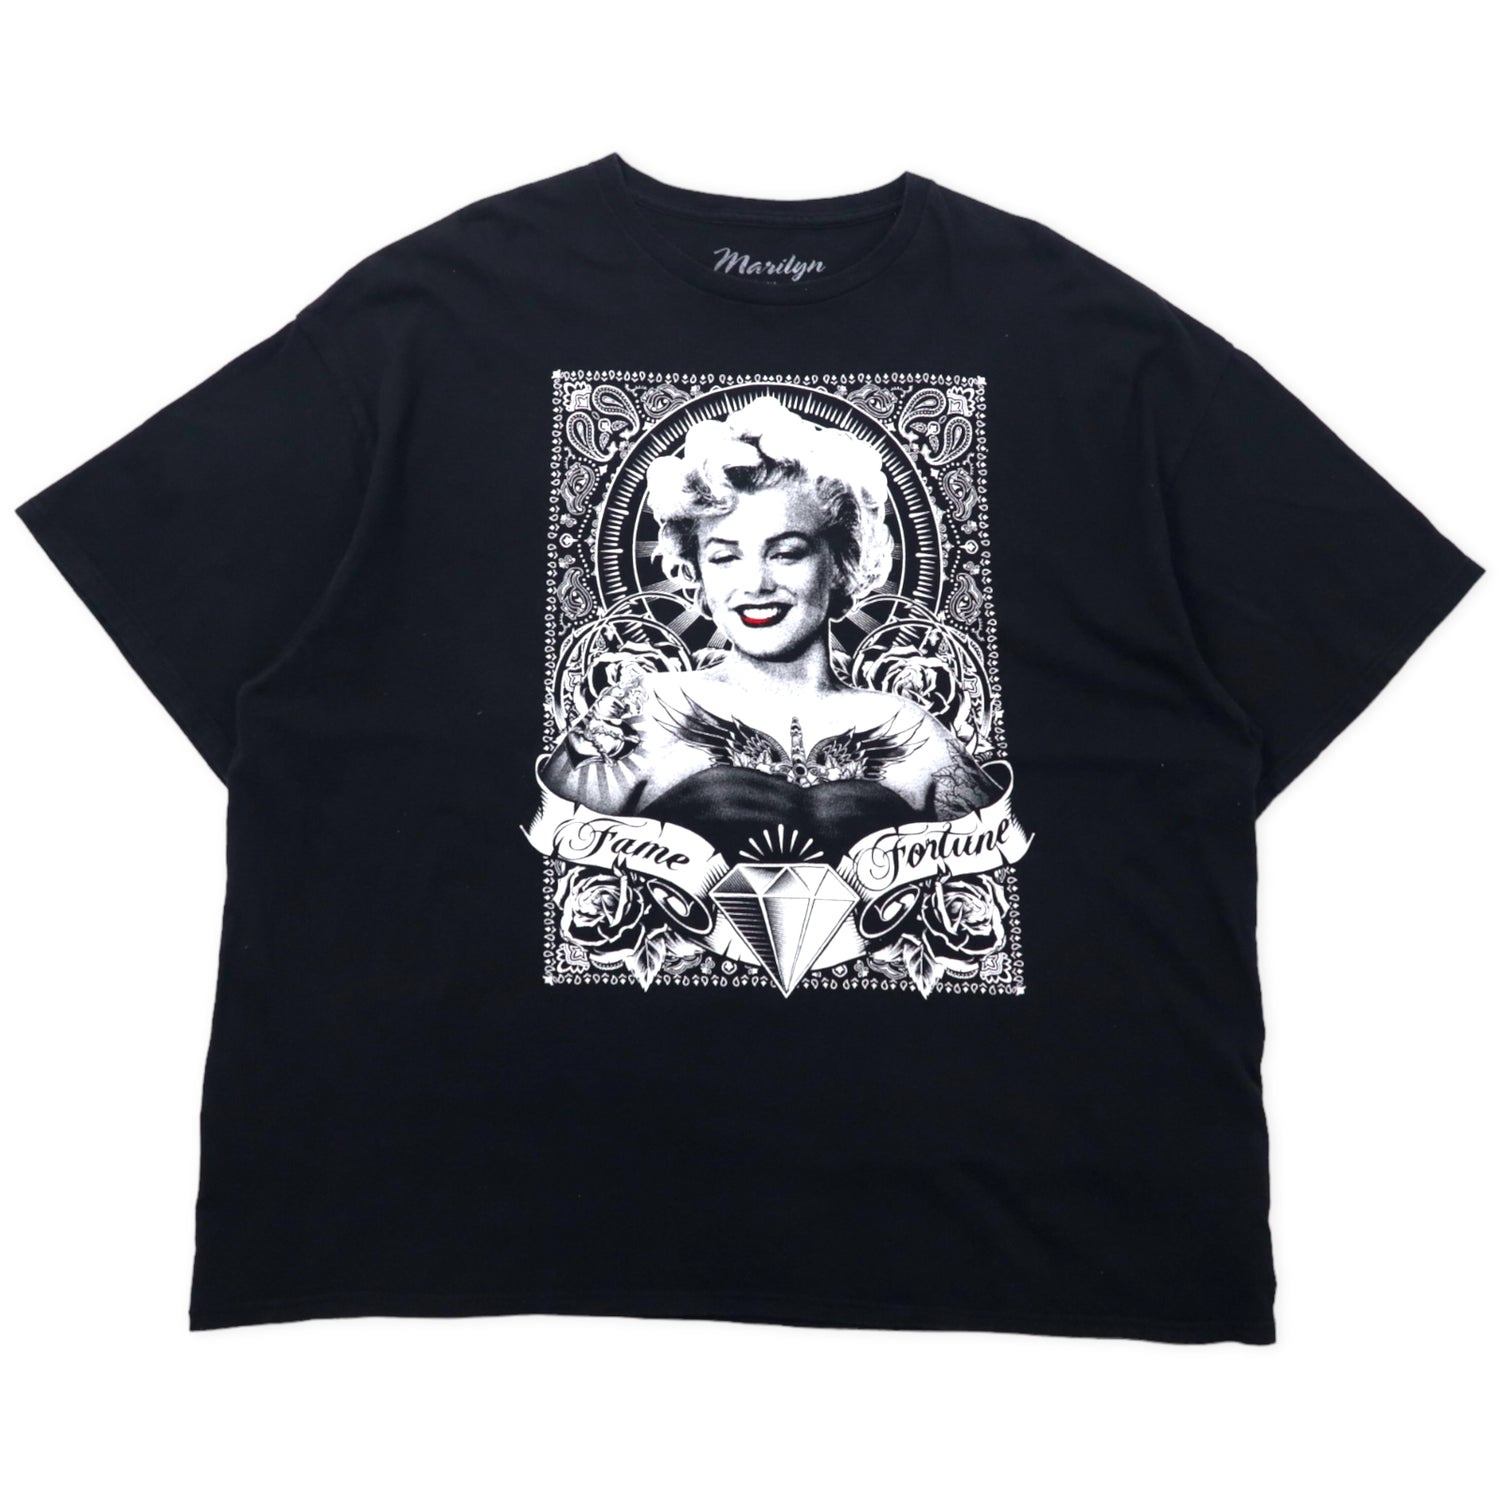 Marilyn Monroe Tattoo Palody T-Shirt 3XL Black Cotton FAME FORTUNE 